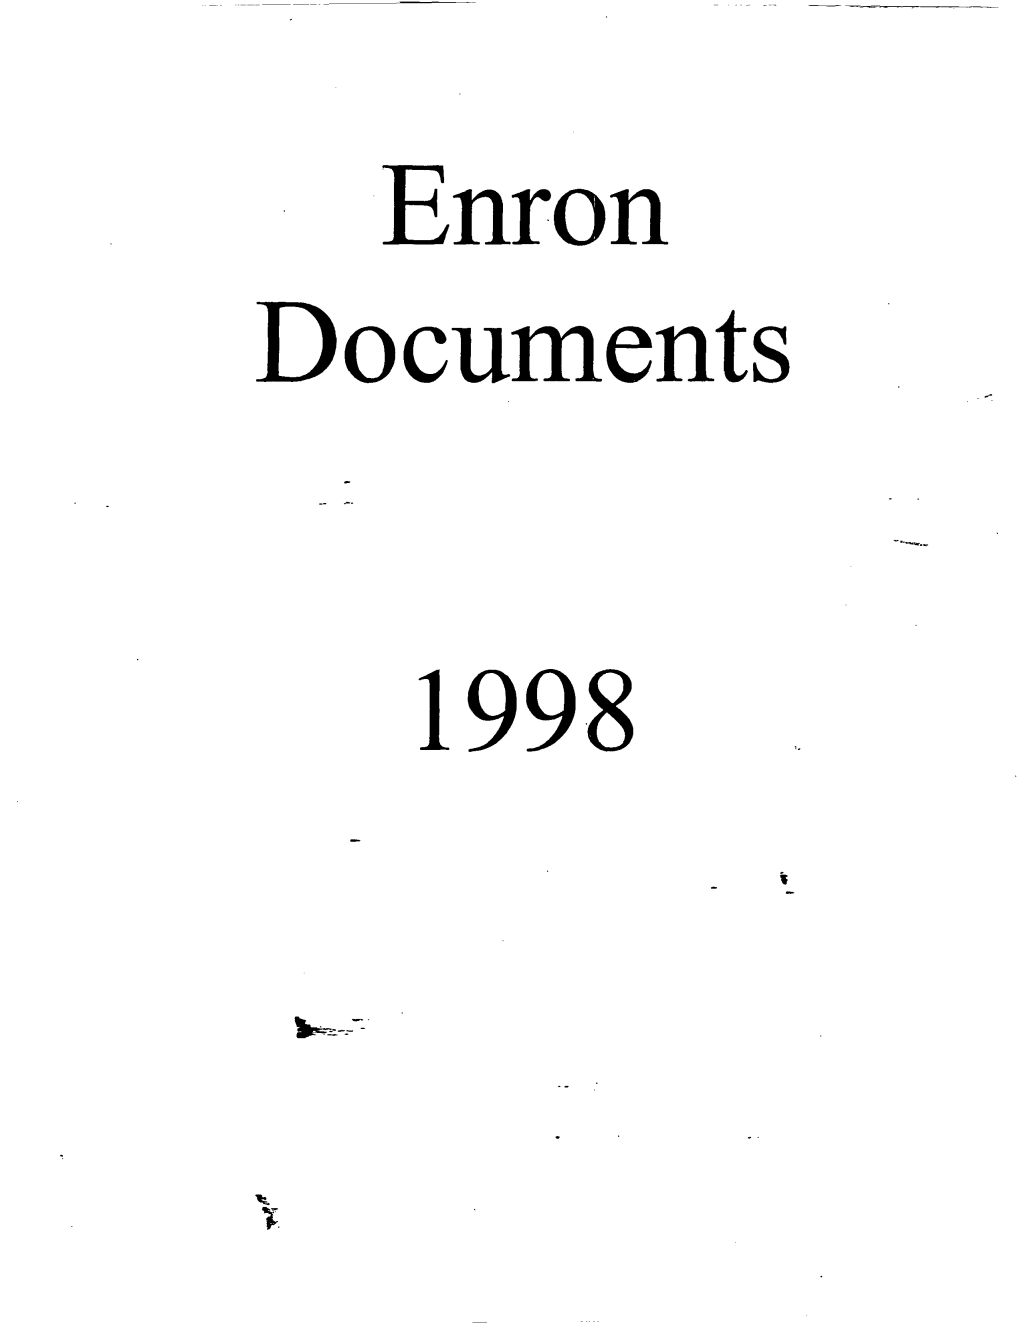 Enron Documents 1998